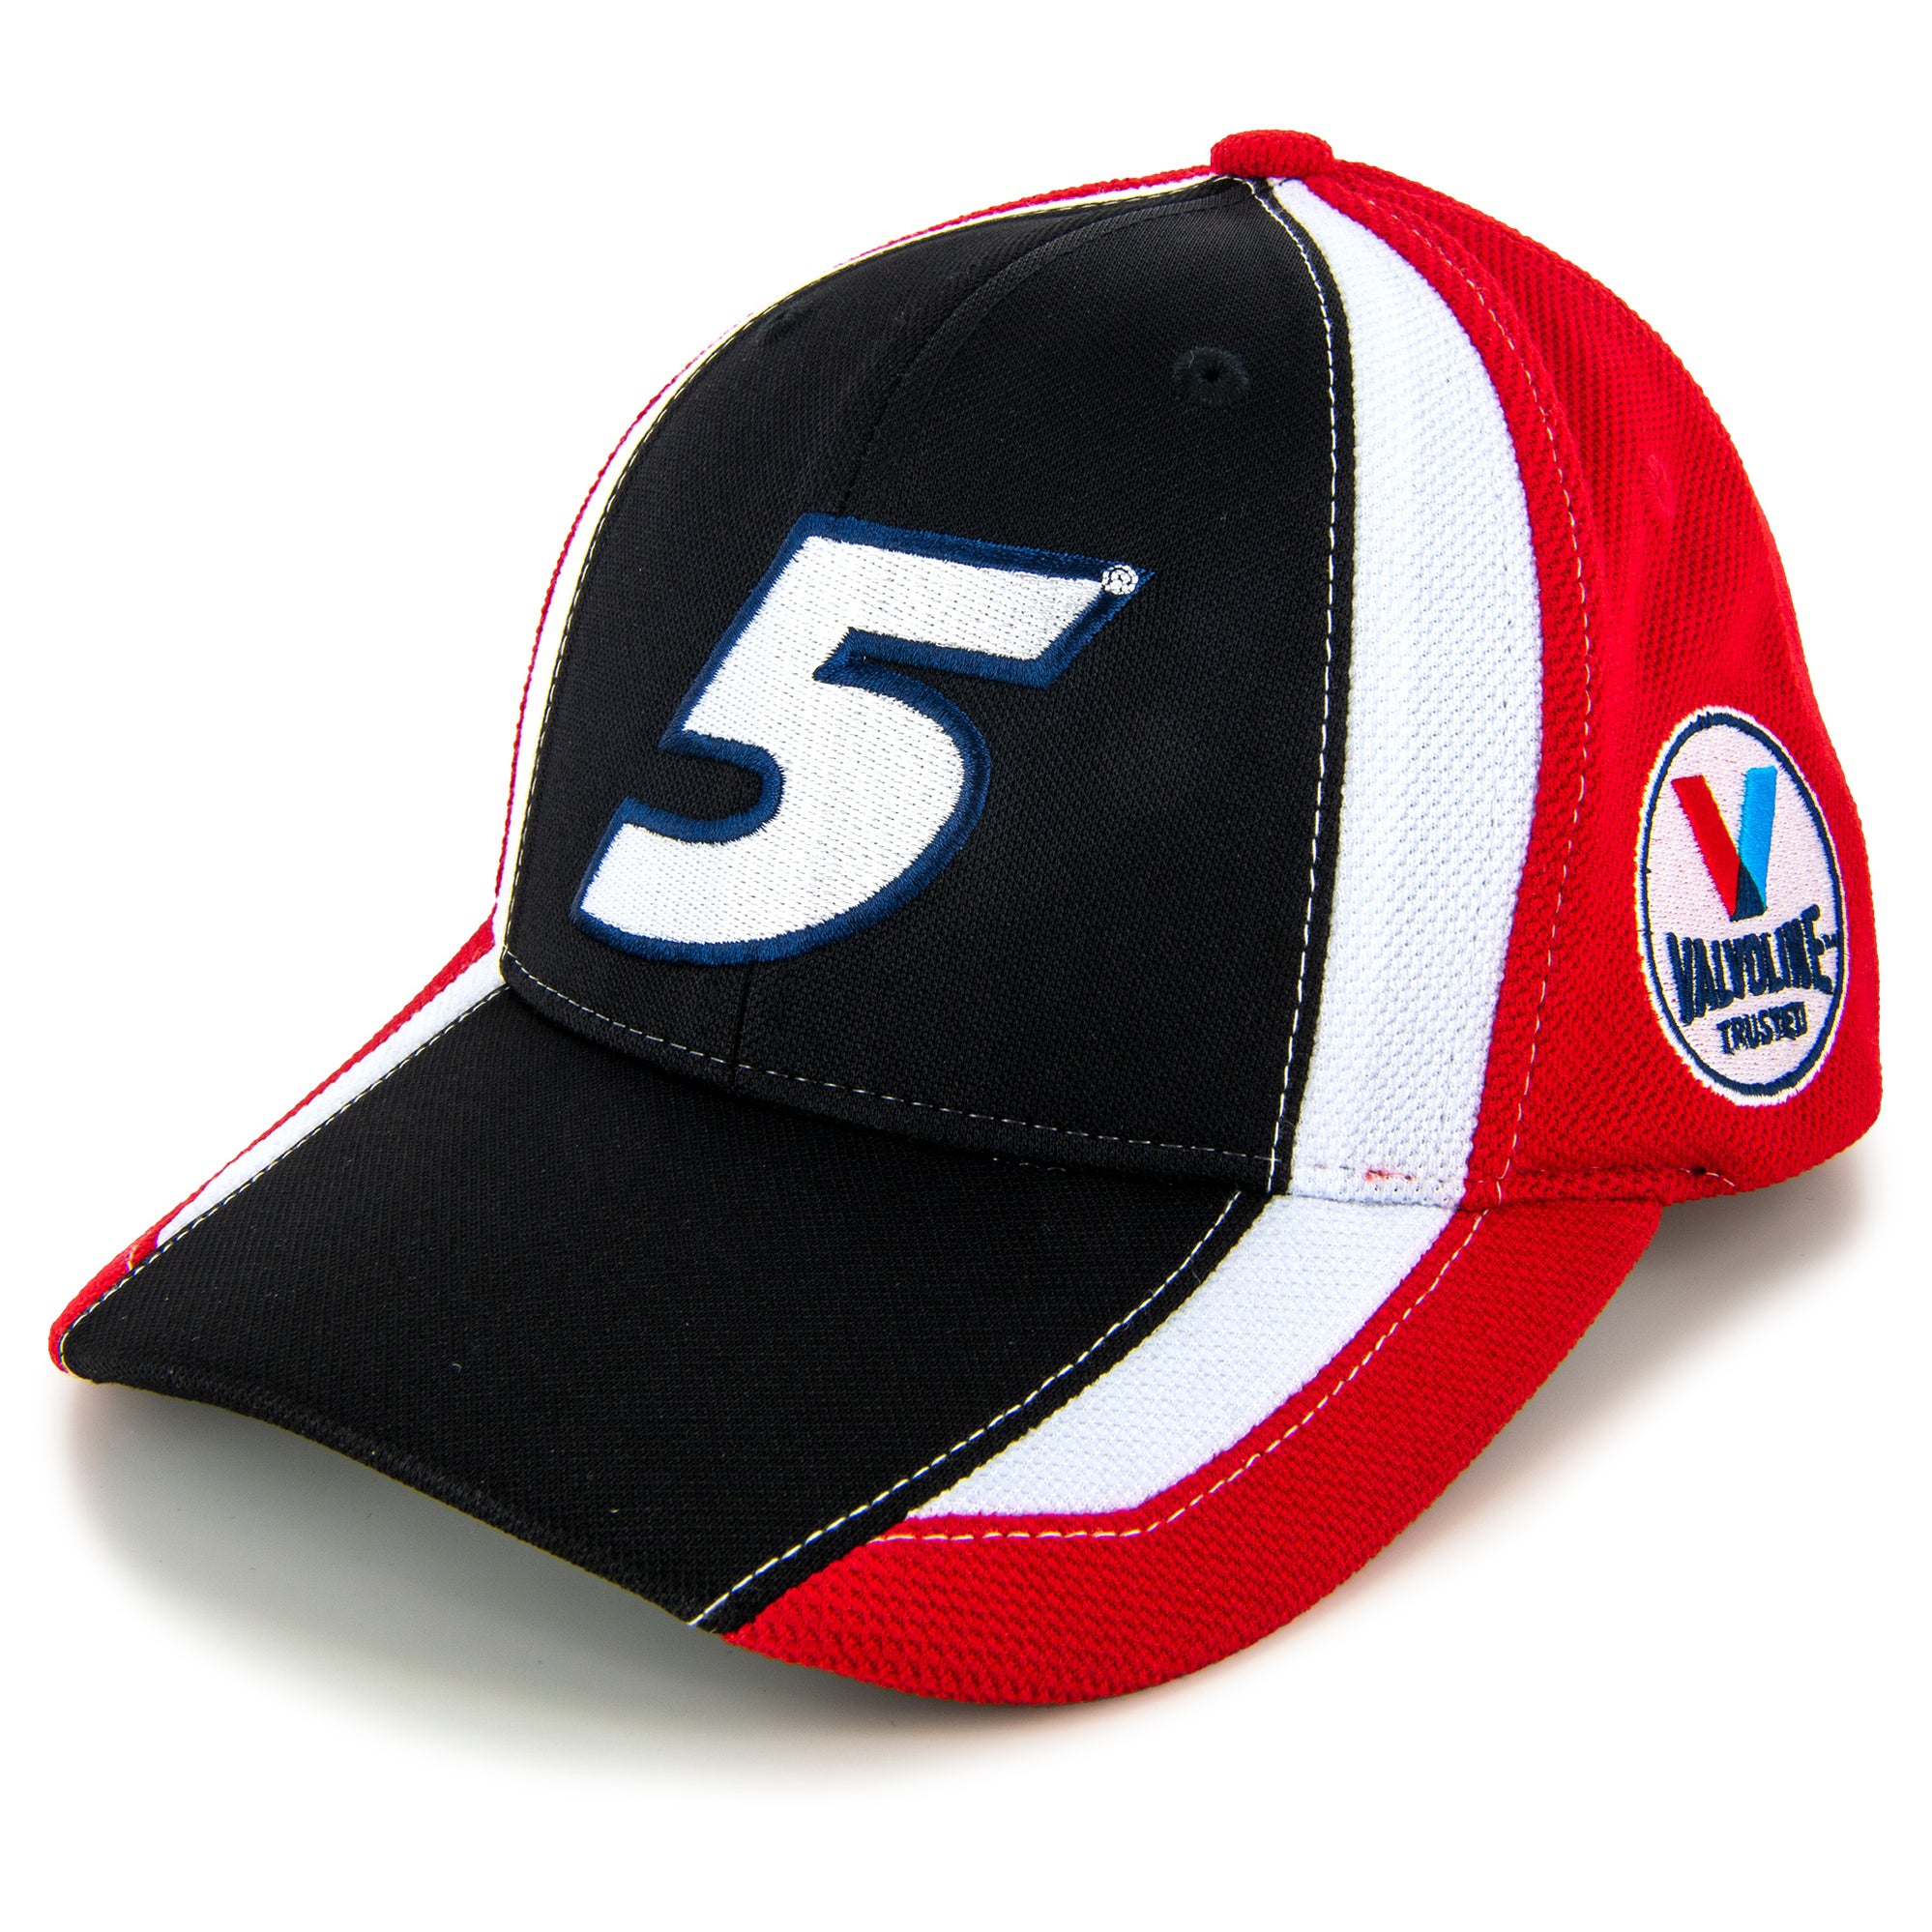 Shop Kyle Larson Hats, Guaranteed Lowest Prices at RacingUSA